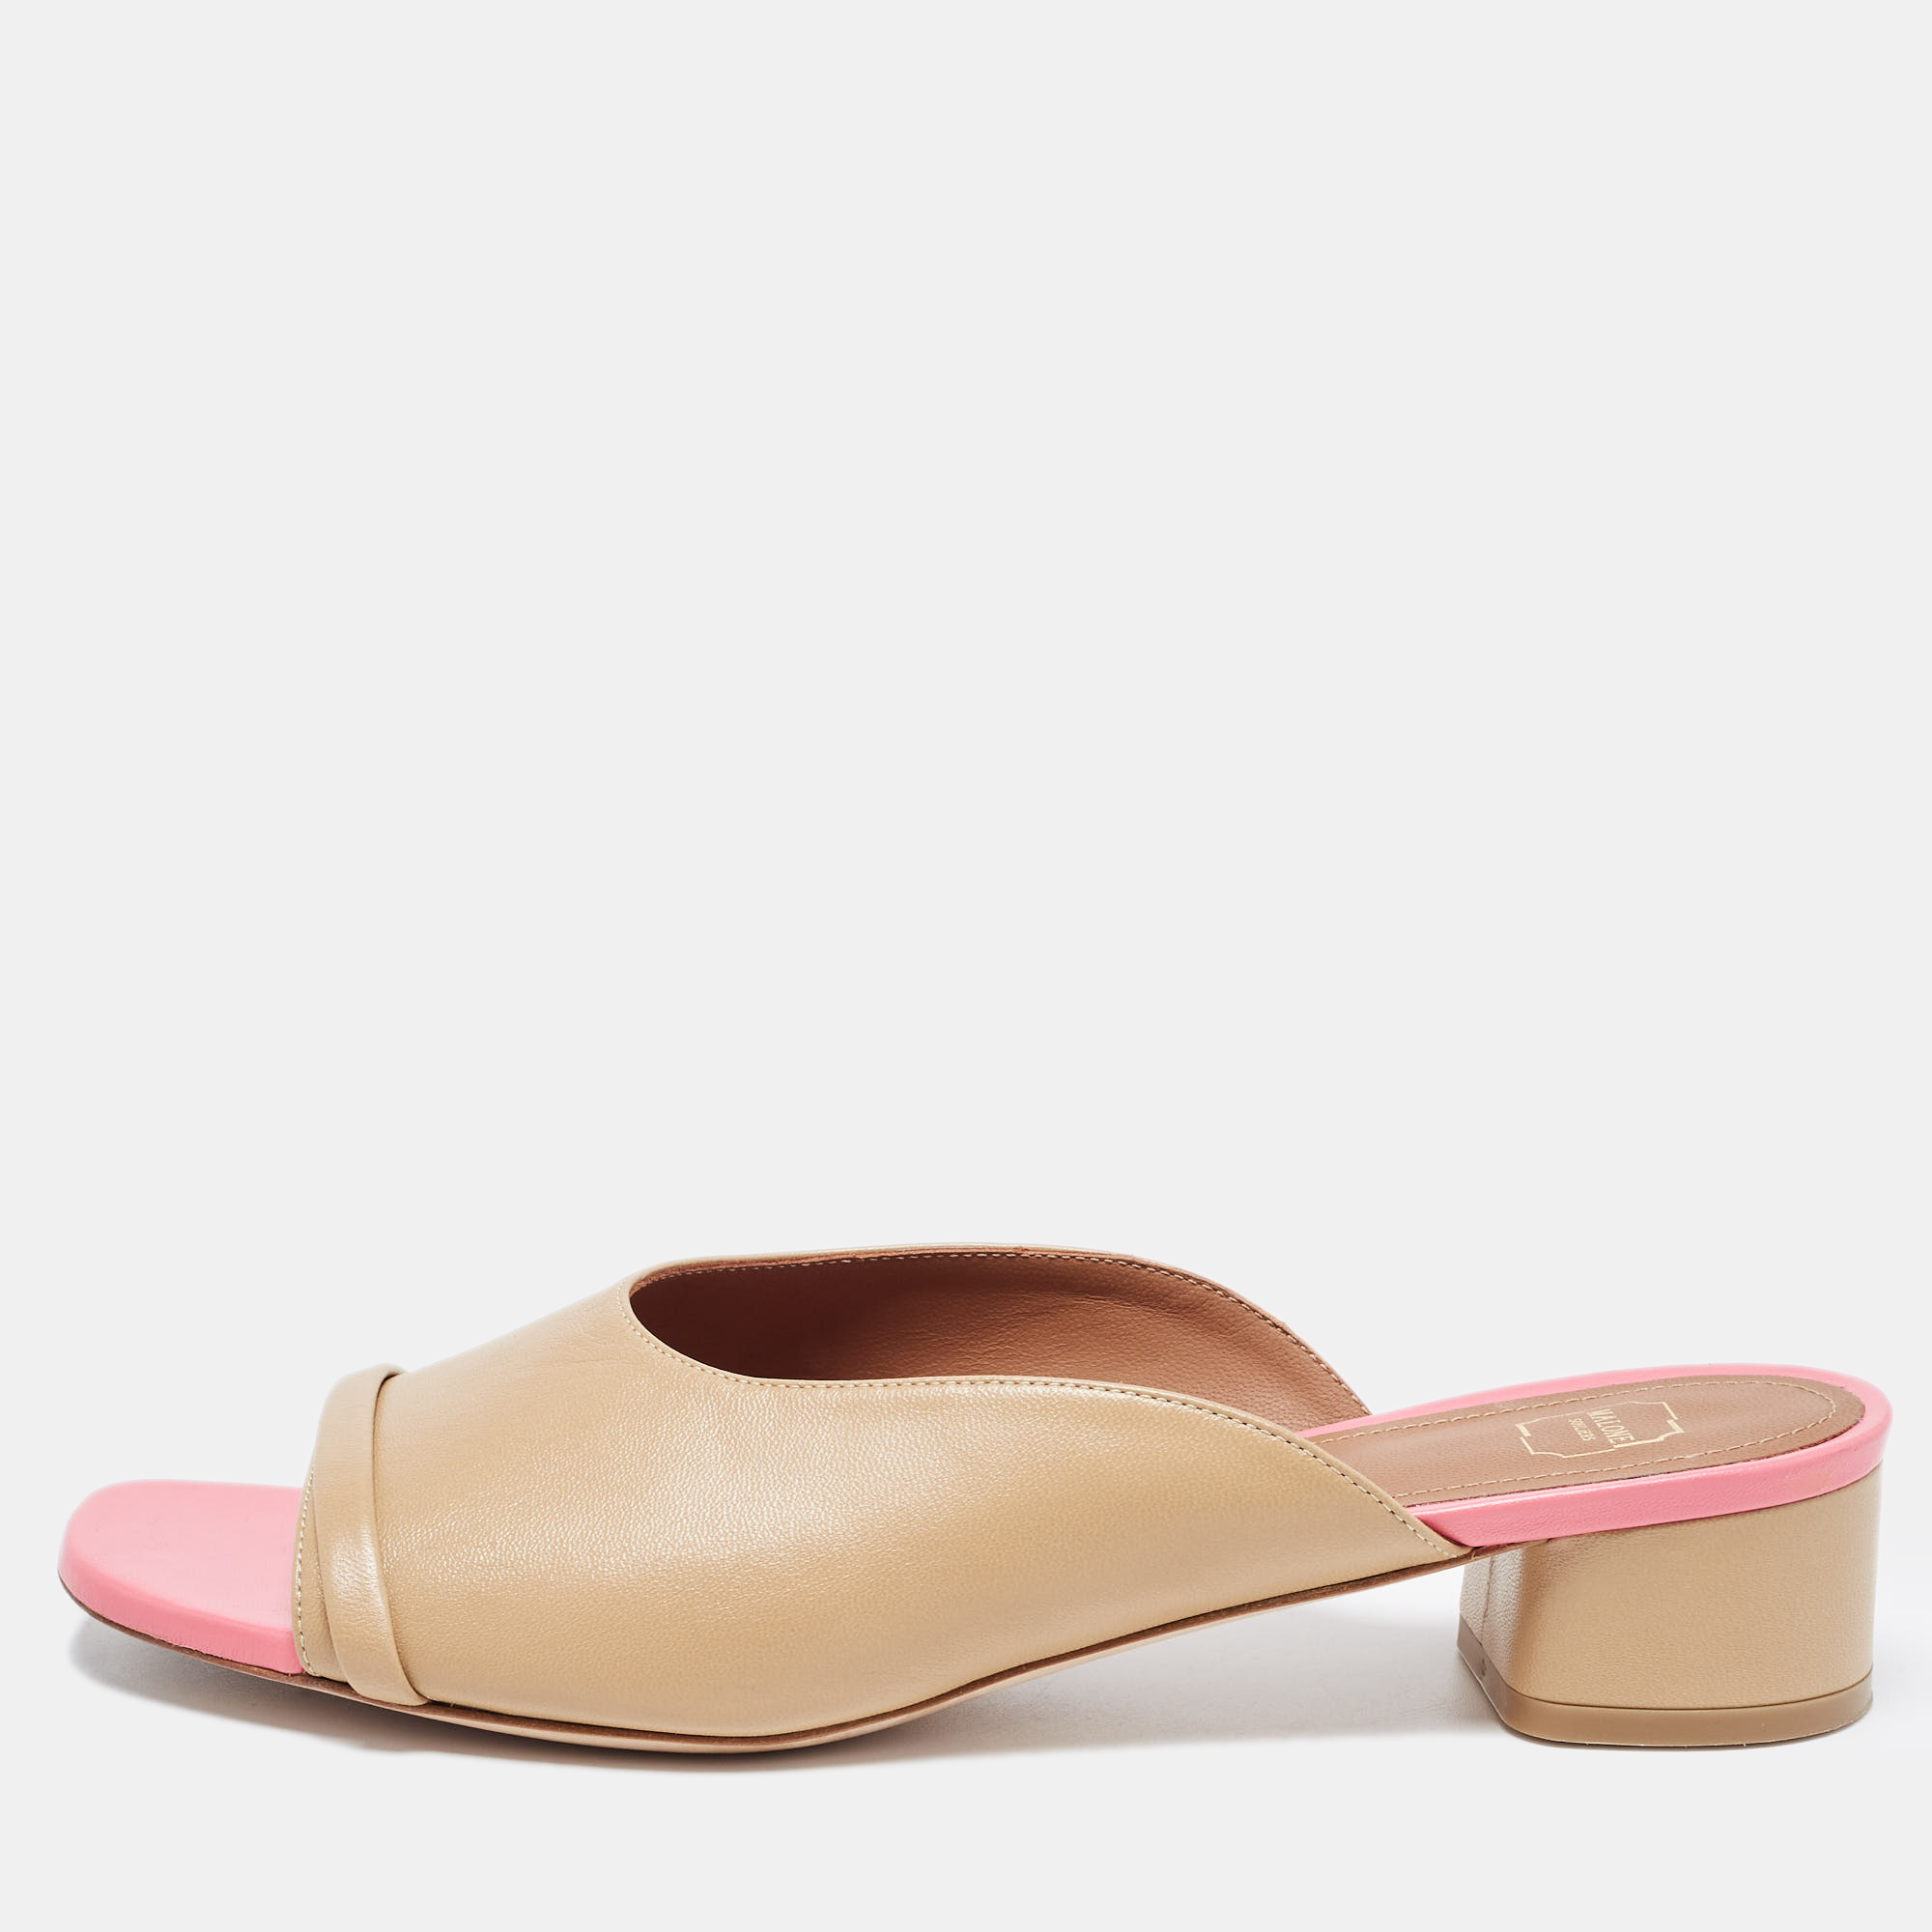 Malone Souliers Beige/Pink Leather Sena Slide Sandals Size 39.5